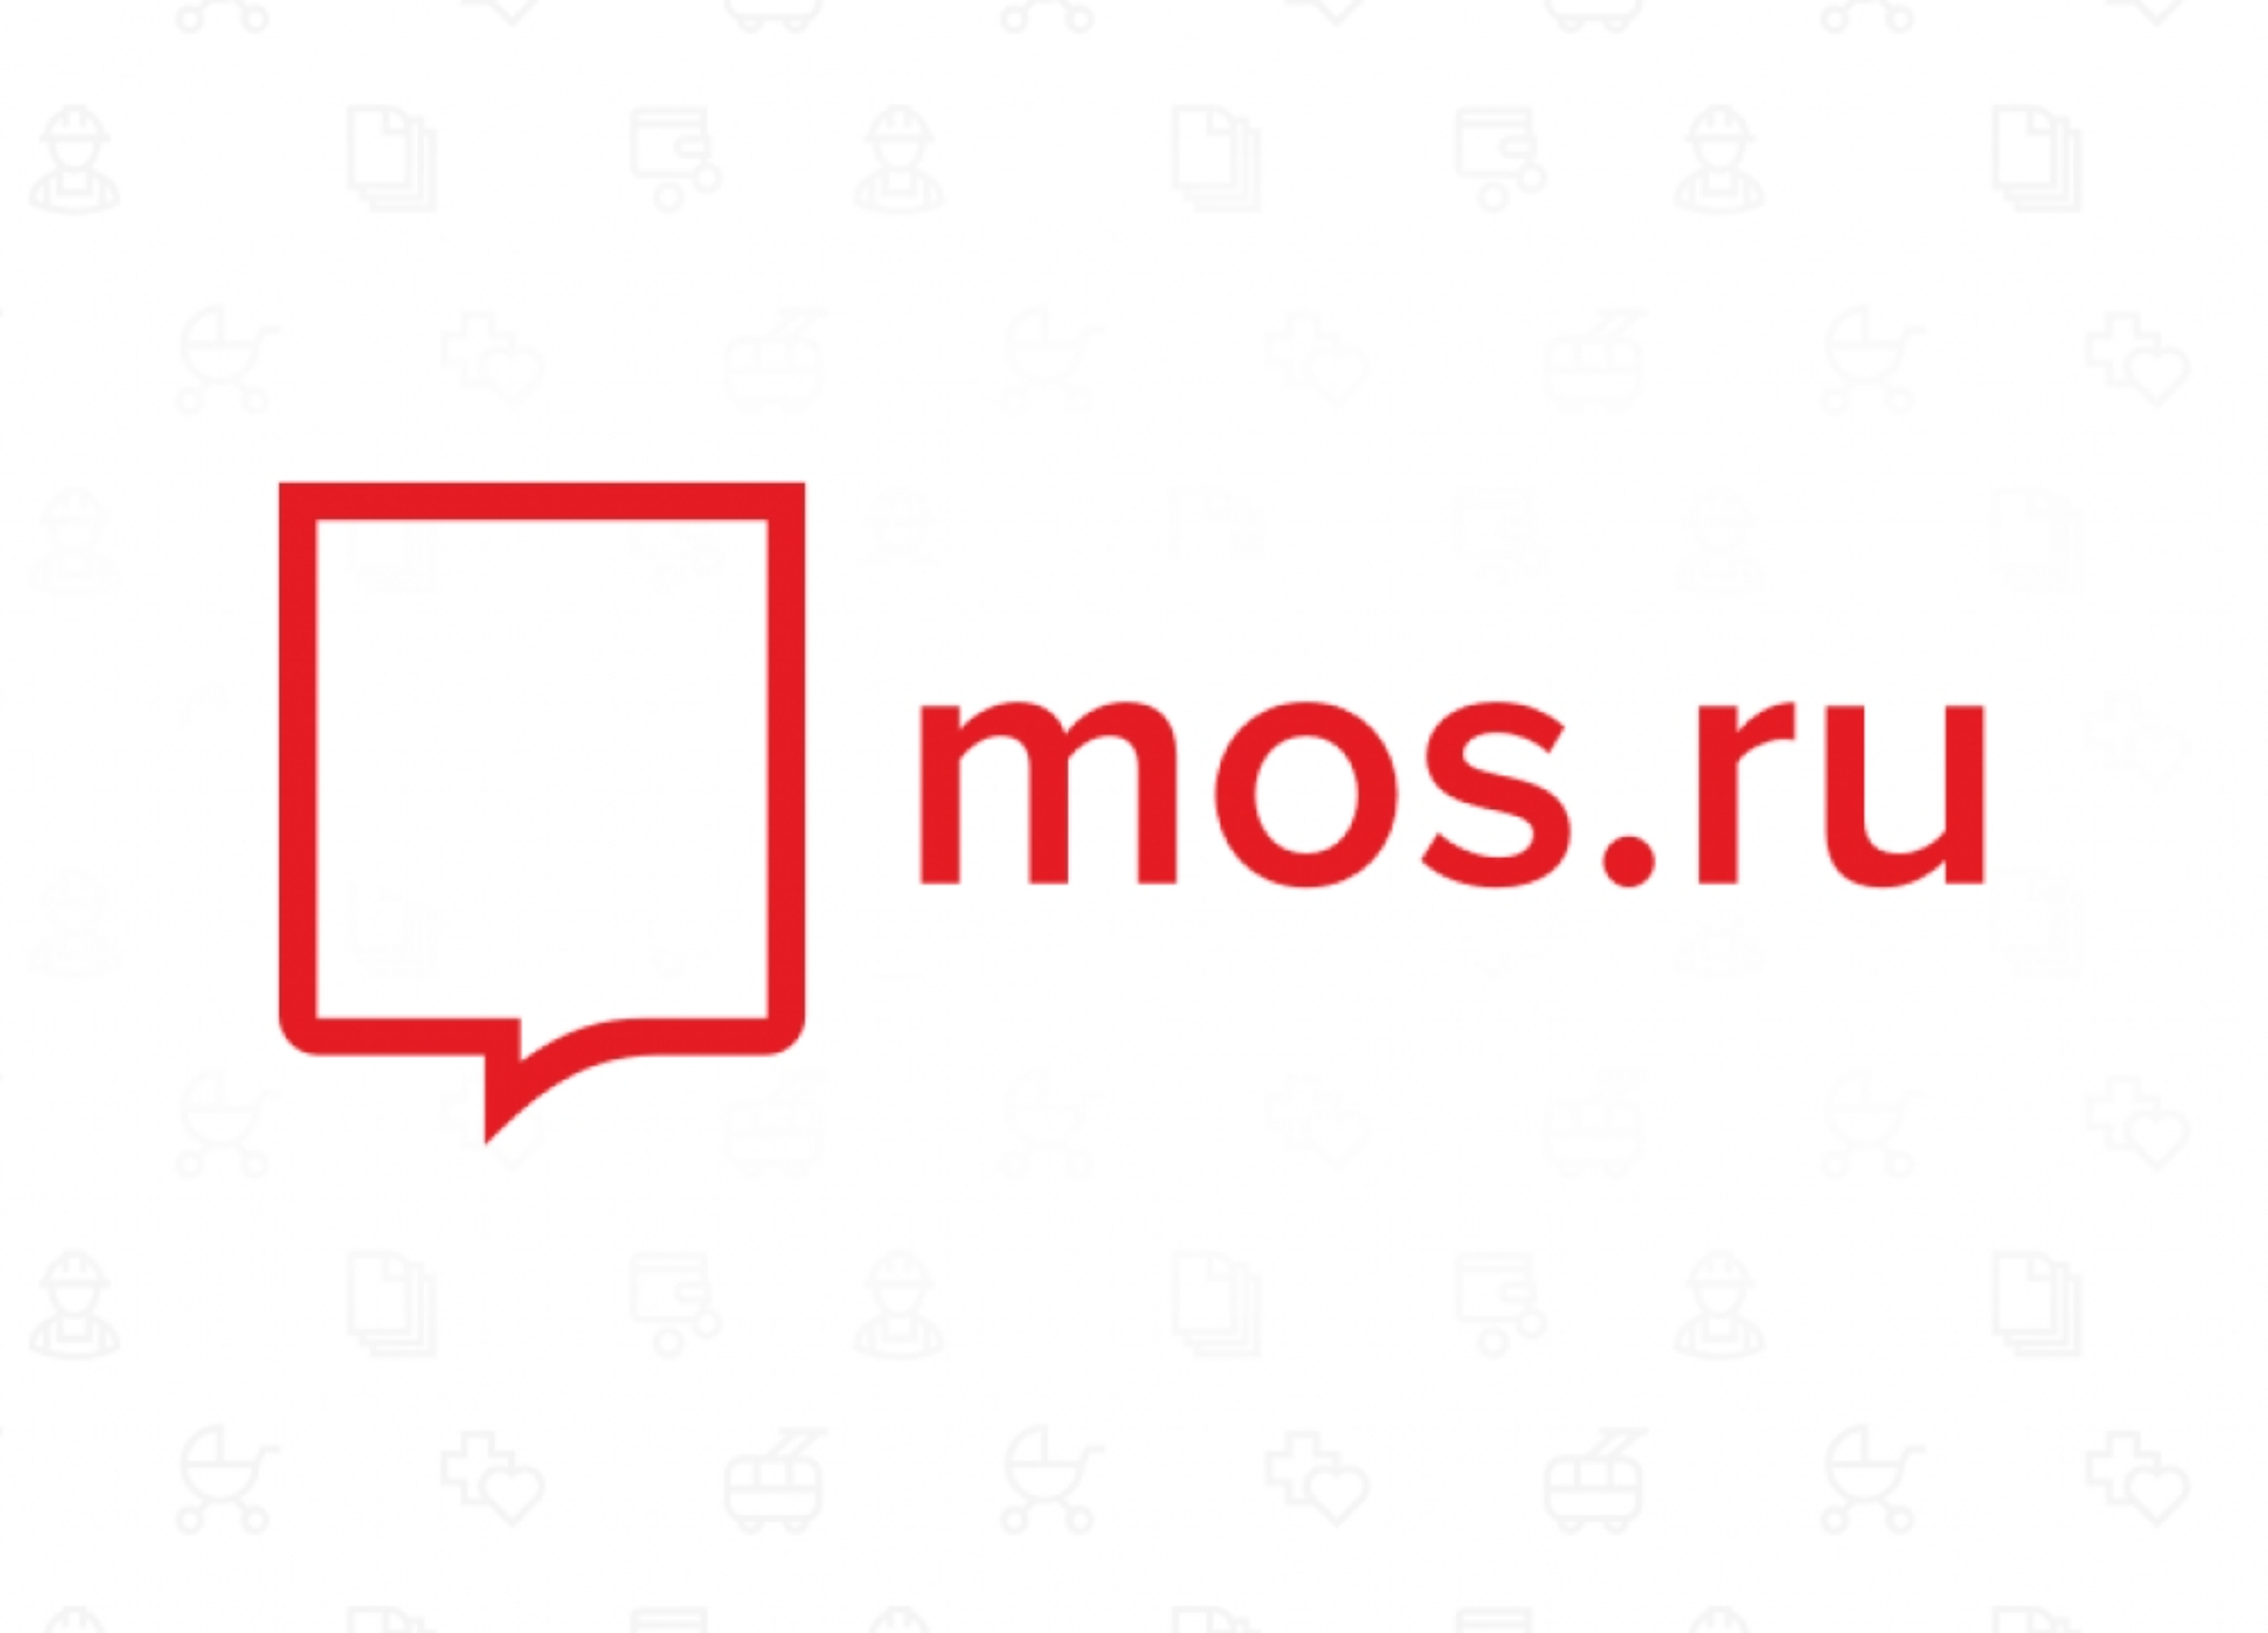 Мос ру крови. Mos.ru логотип. Логотип сайта мэра Москвы. Мос РК.